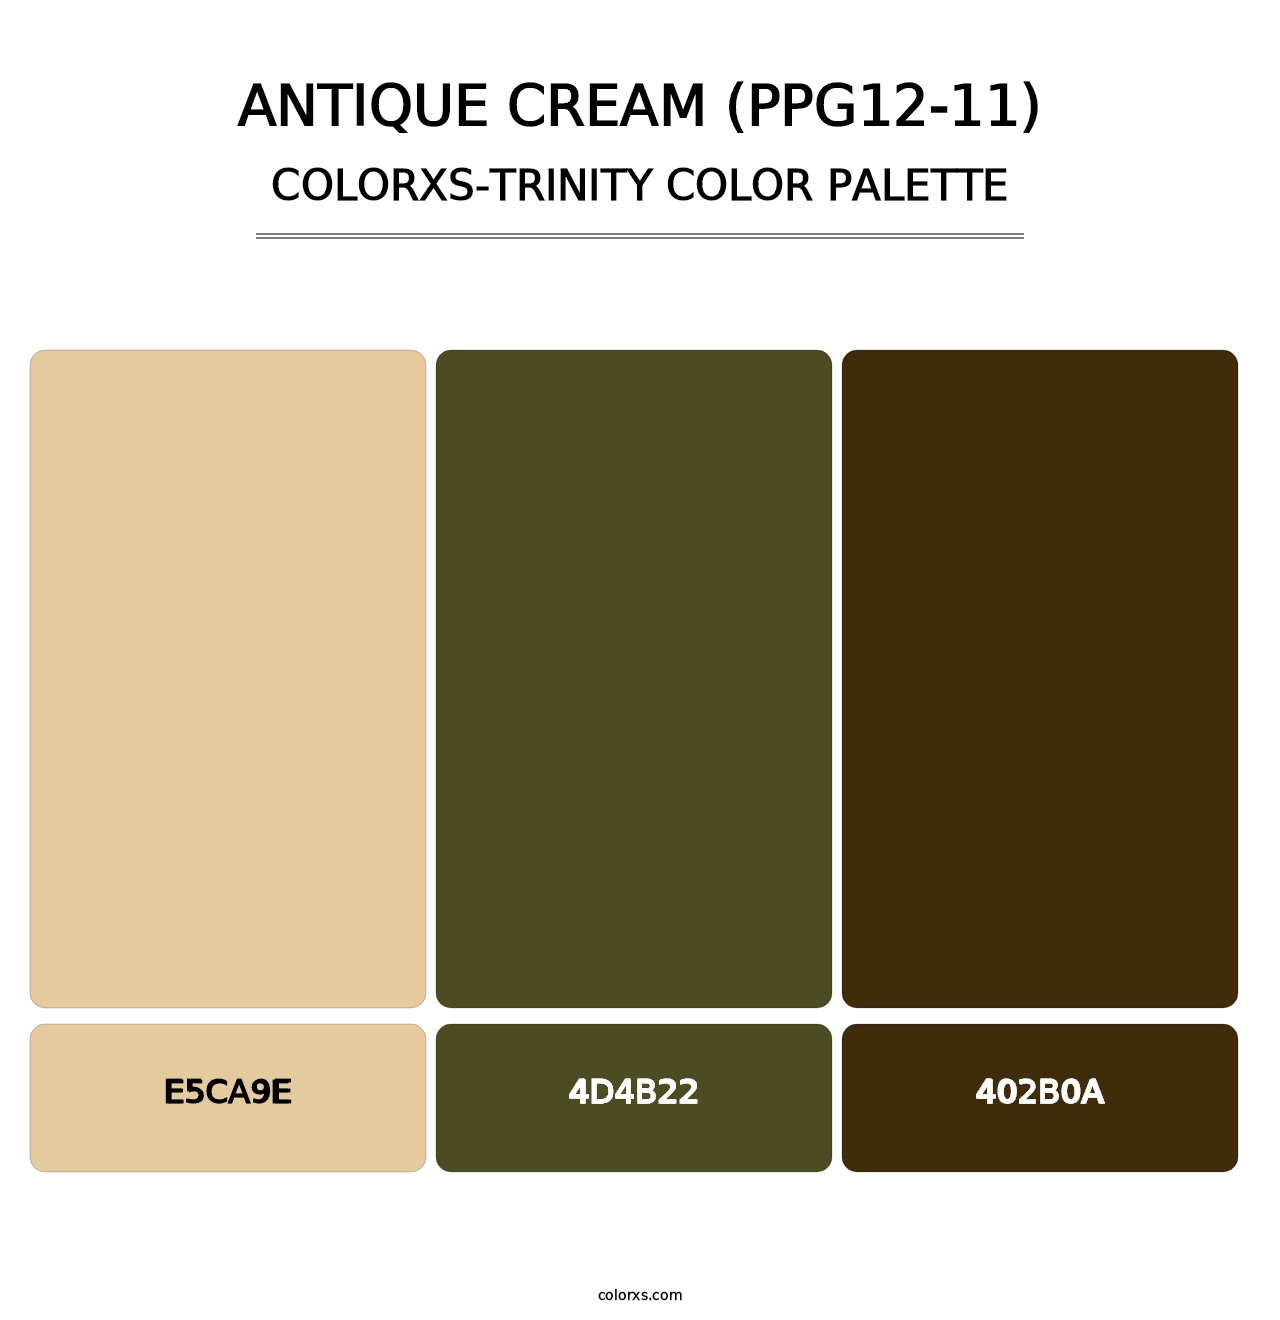 Antique Cream (PPG12-11) - Colorxs Trinity Palette